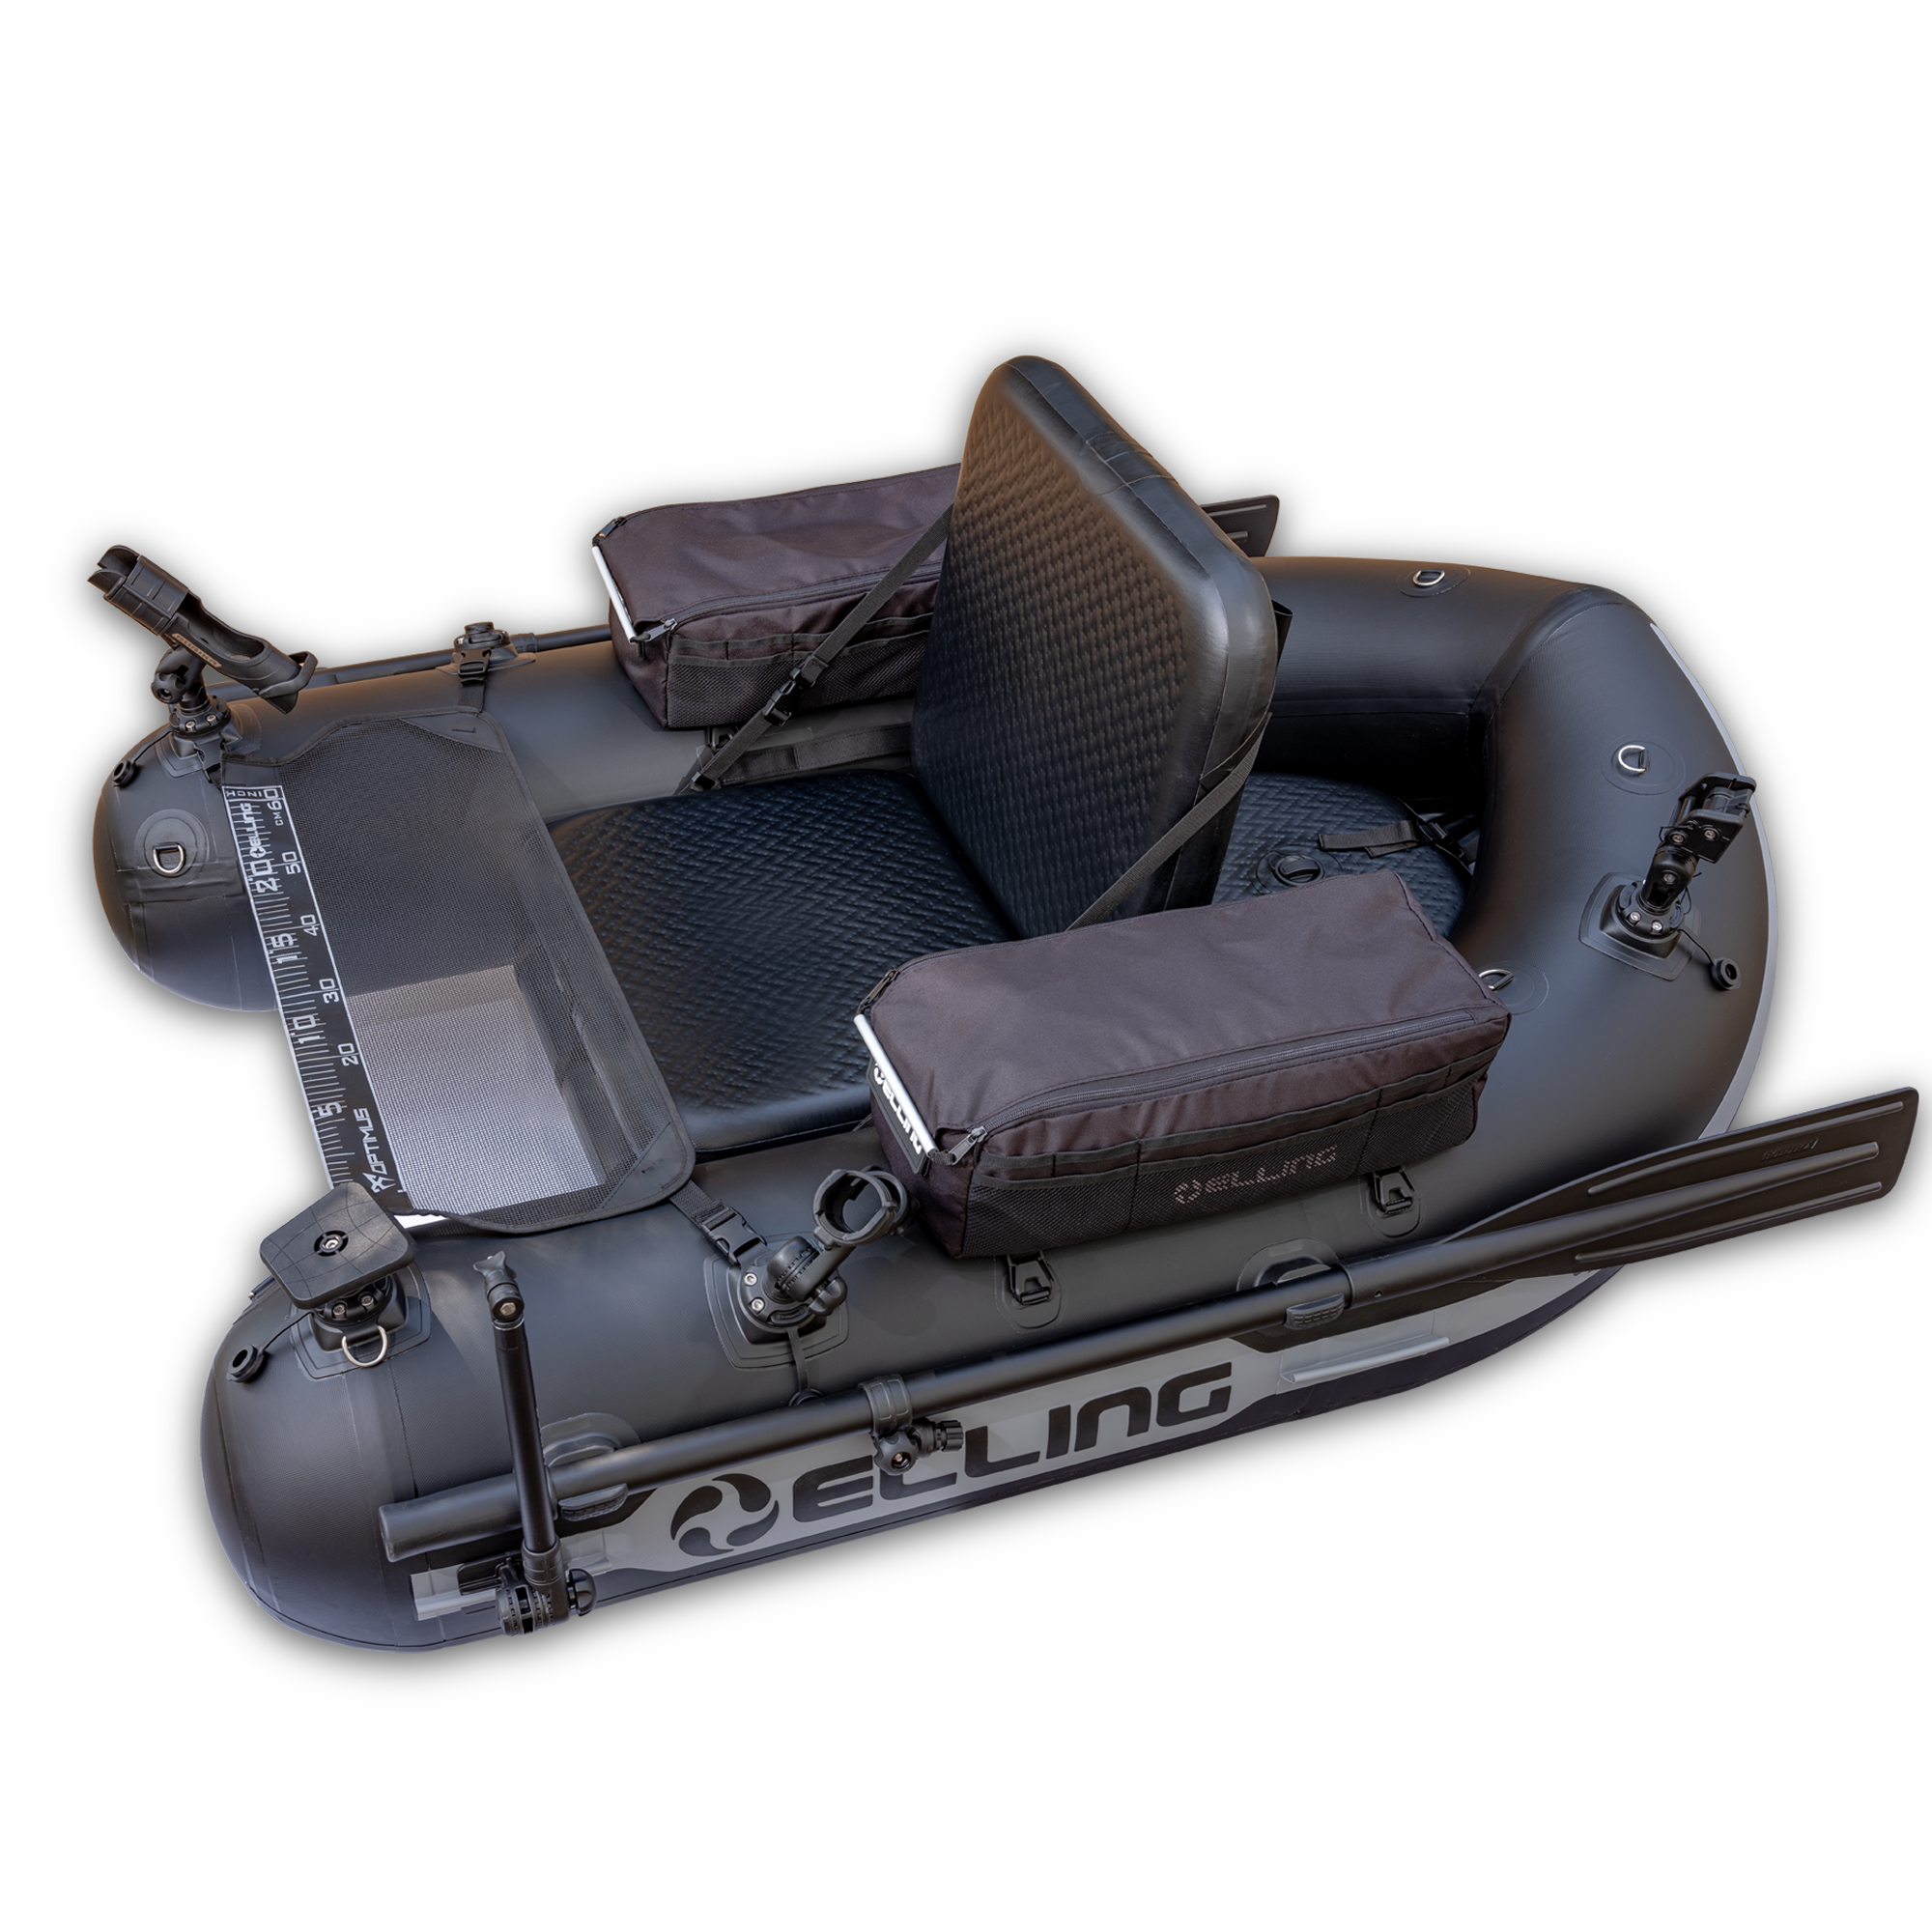 Elling Belly Boat Blog, Optimus Max 2020